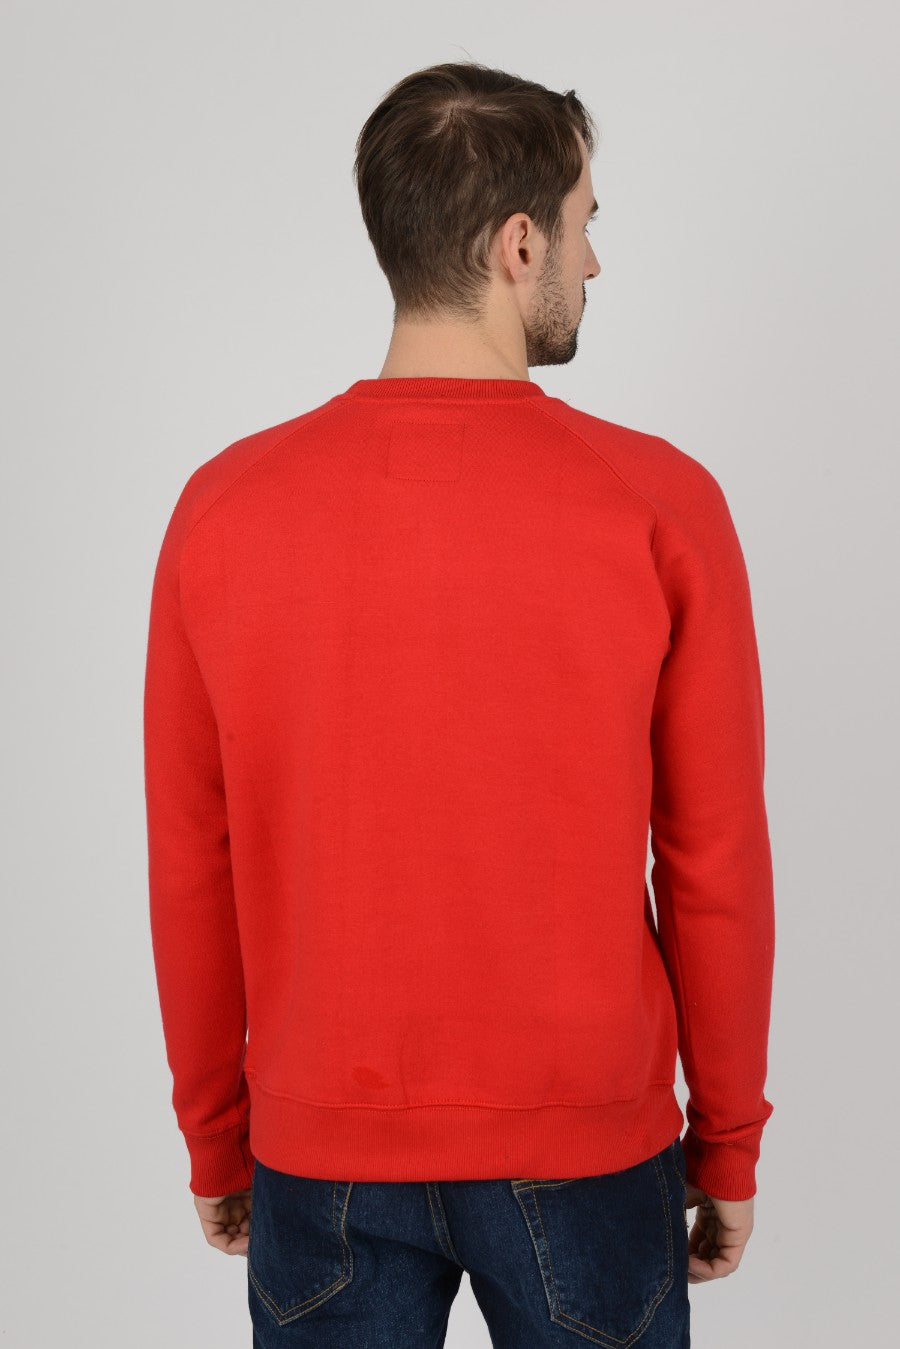 Mens-Raglan-Sweatshirt-Casual-Red